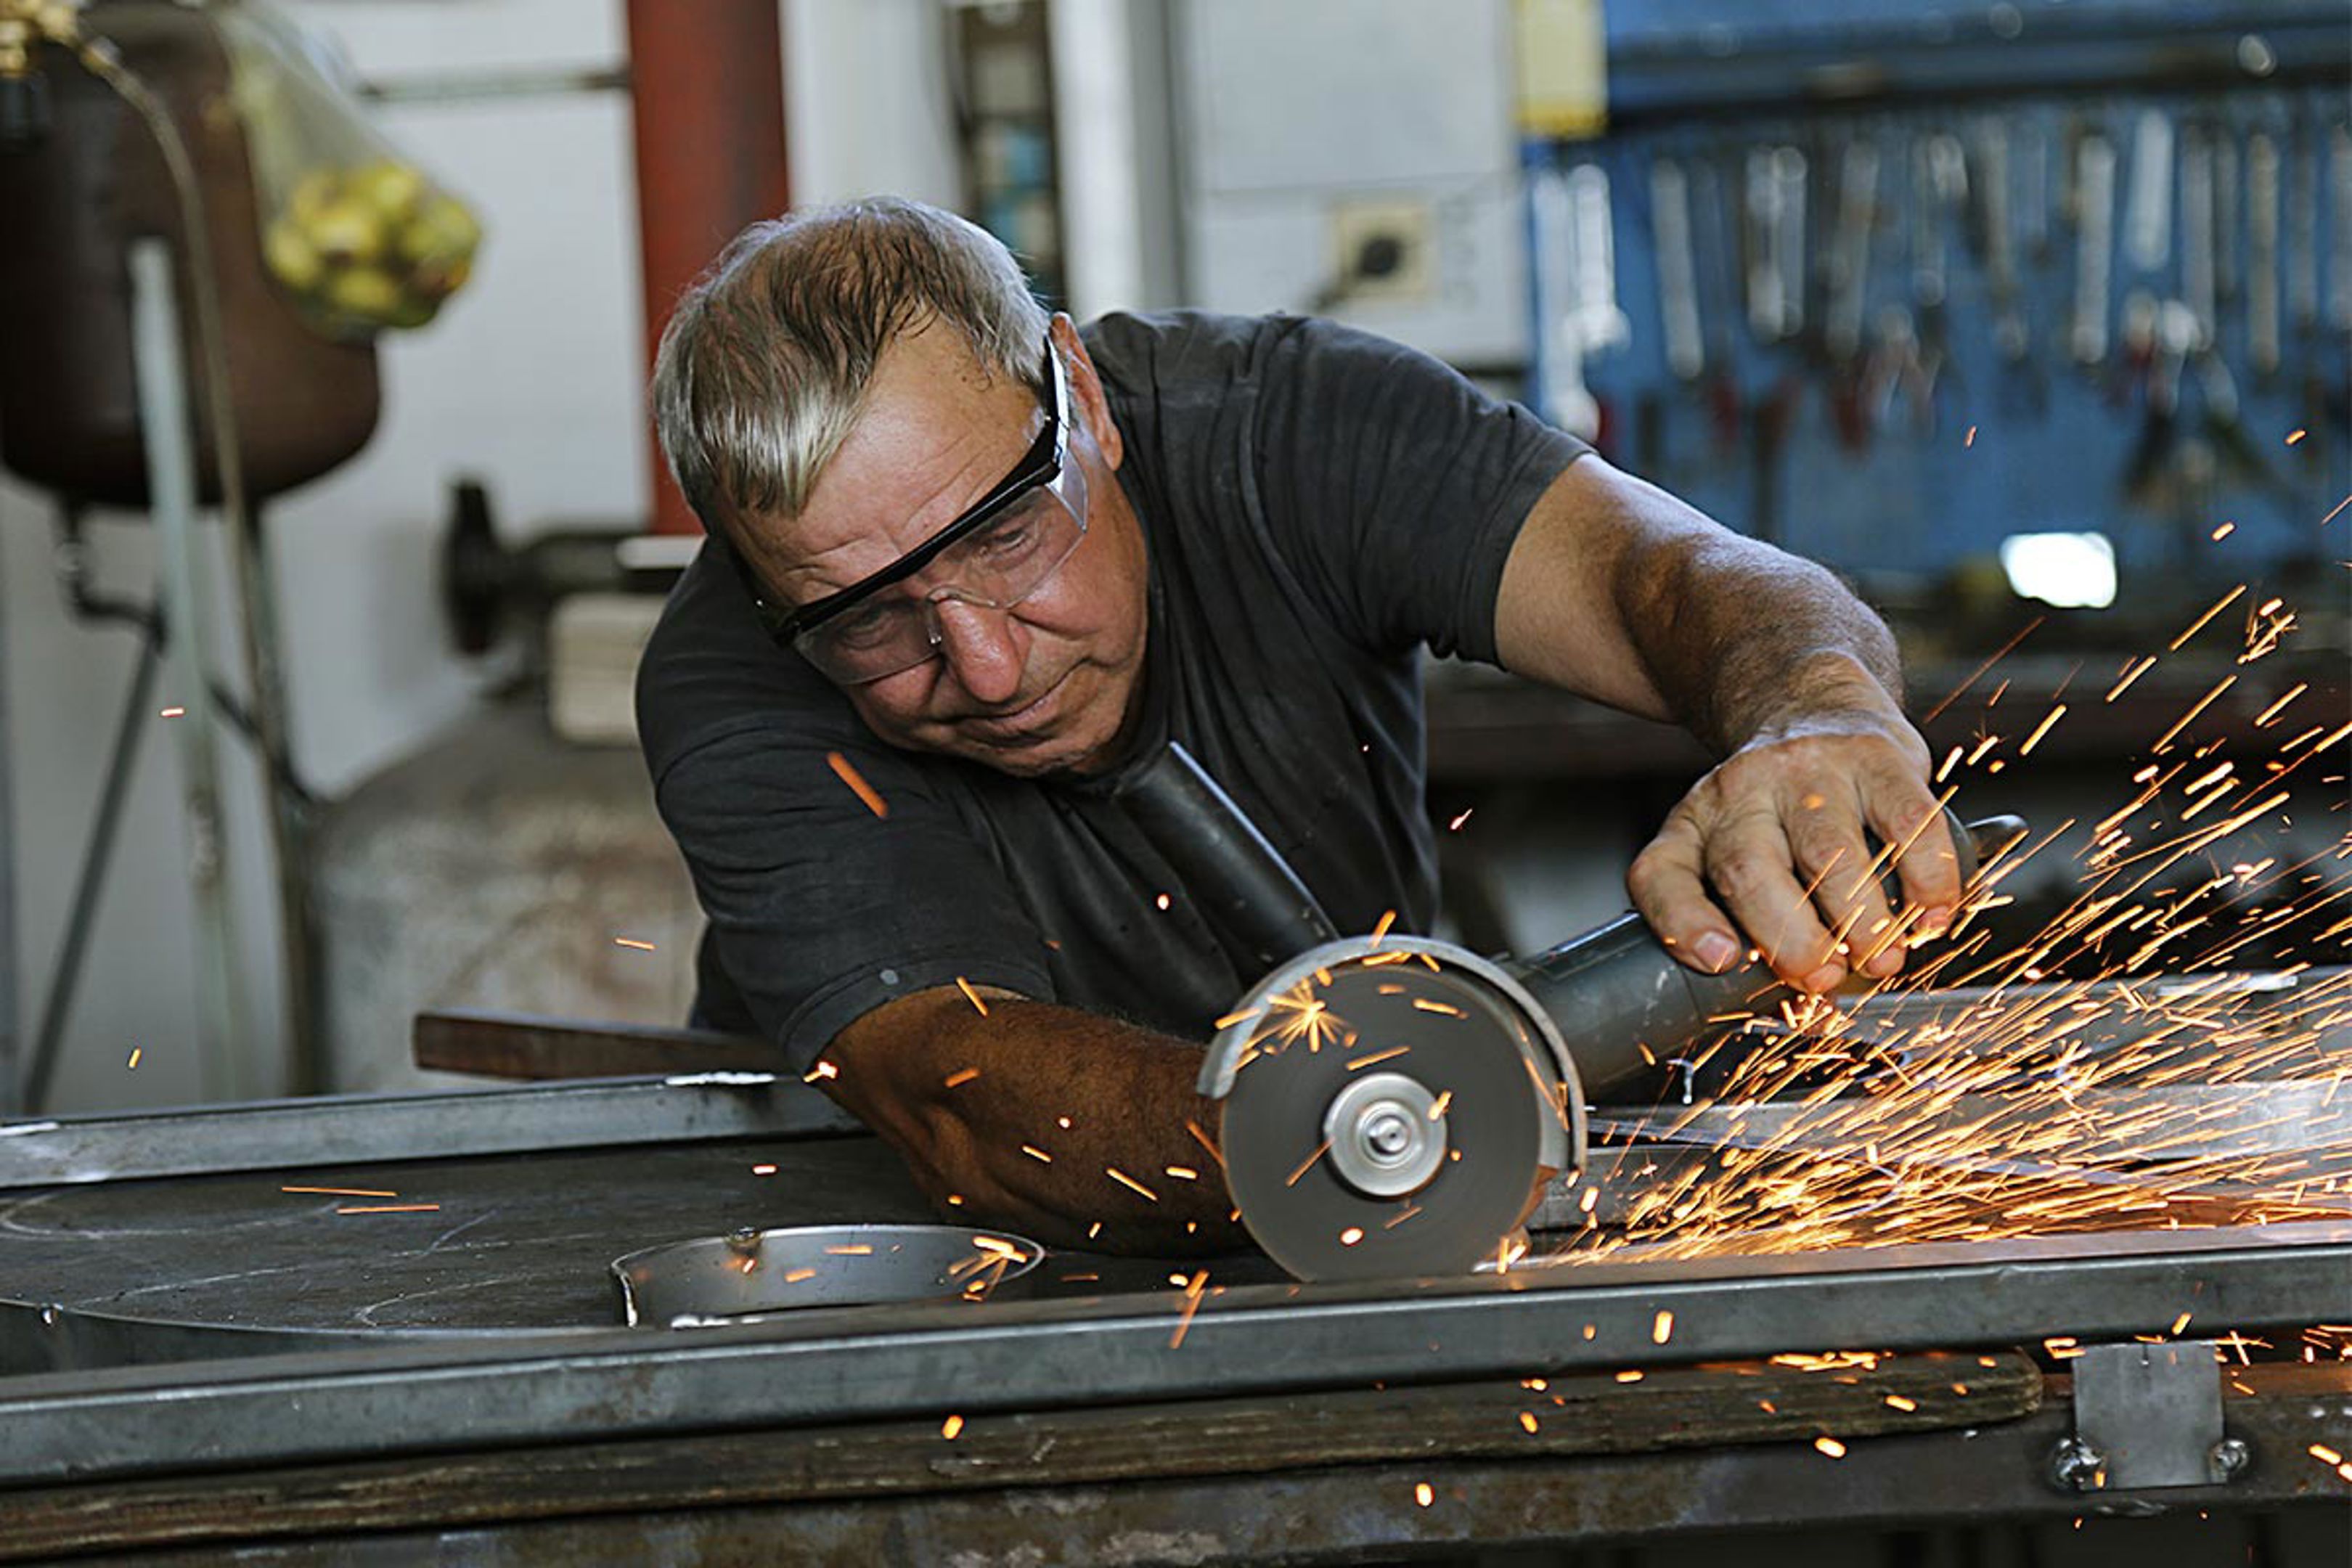 Man using grinder with sparks 